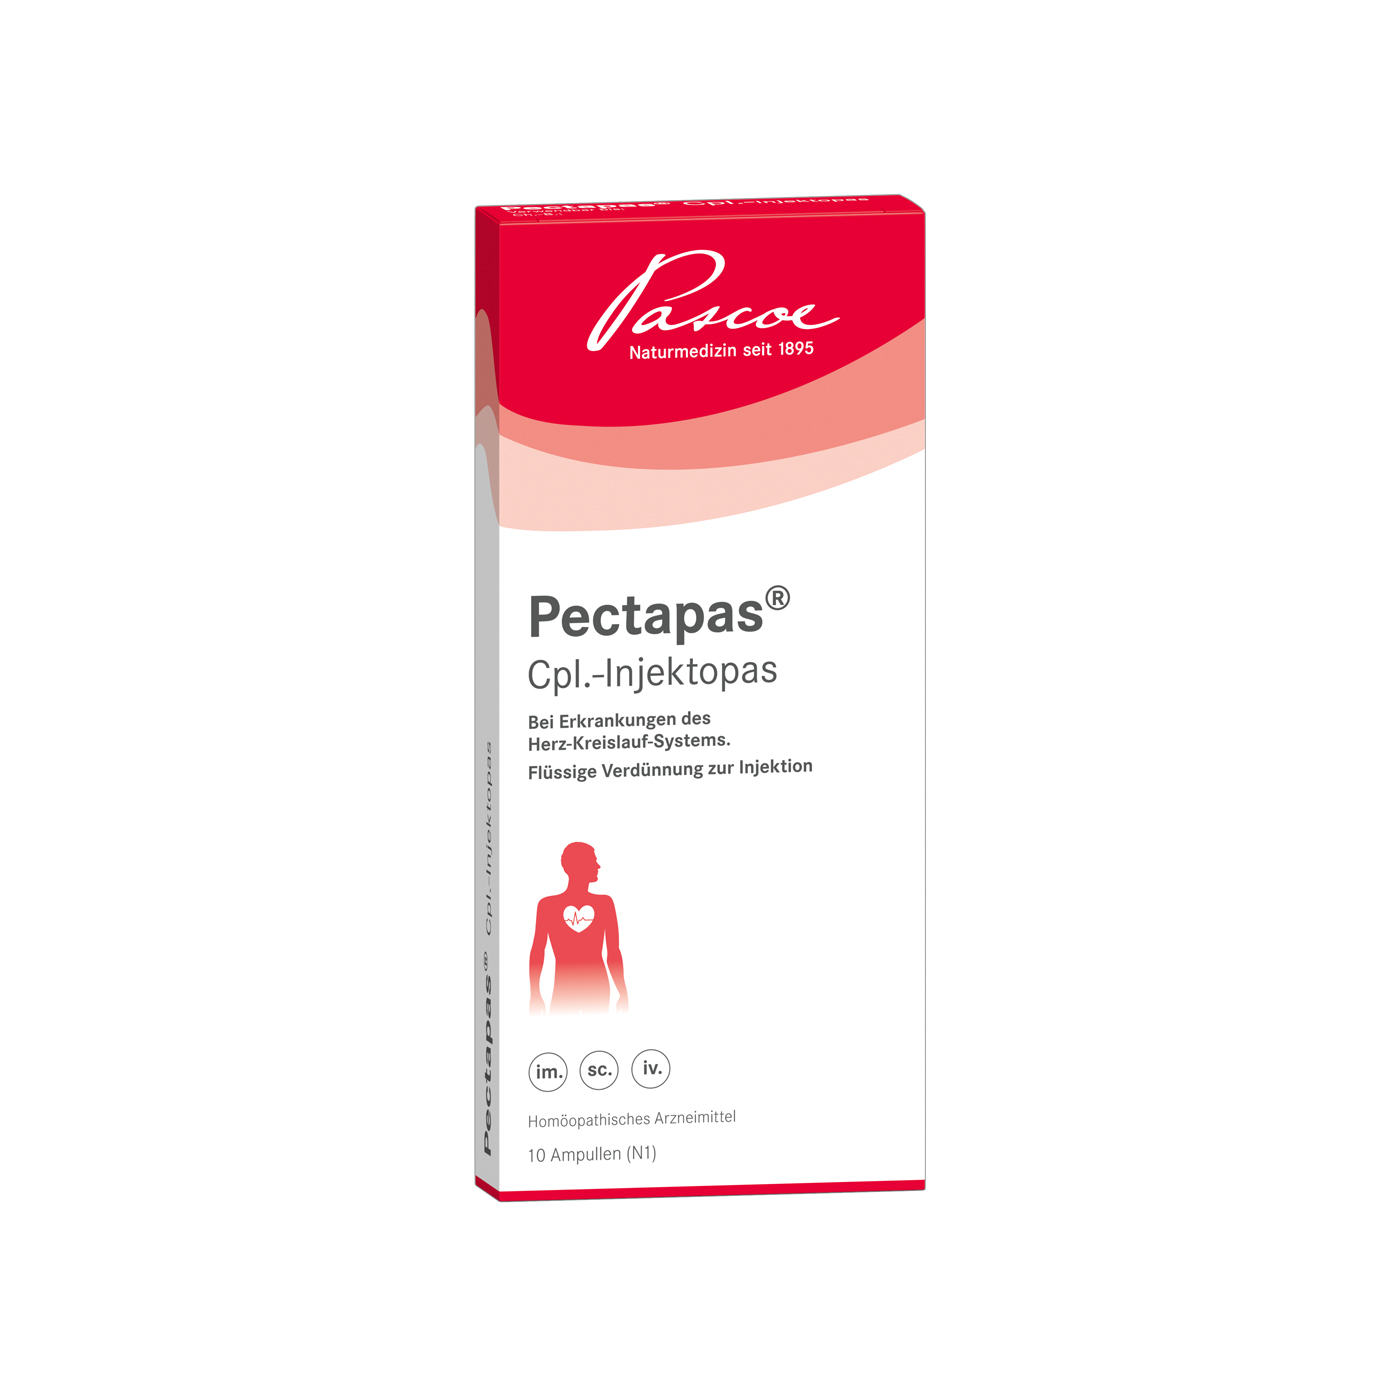 Pectapas Cpl.-Injektopas 10 x 2 ml Packshot PZN 04193846